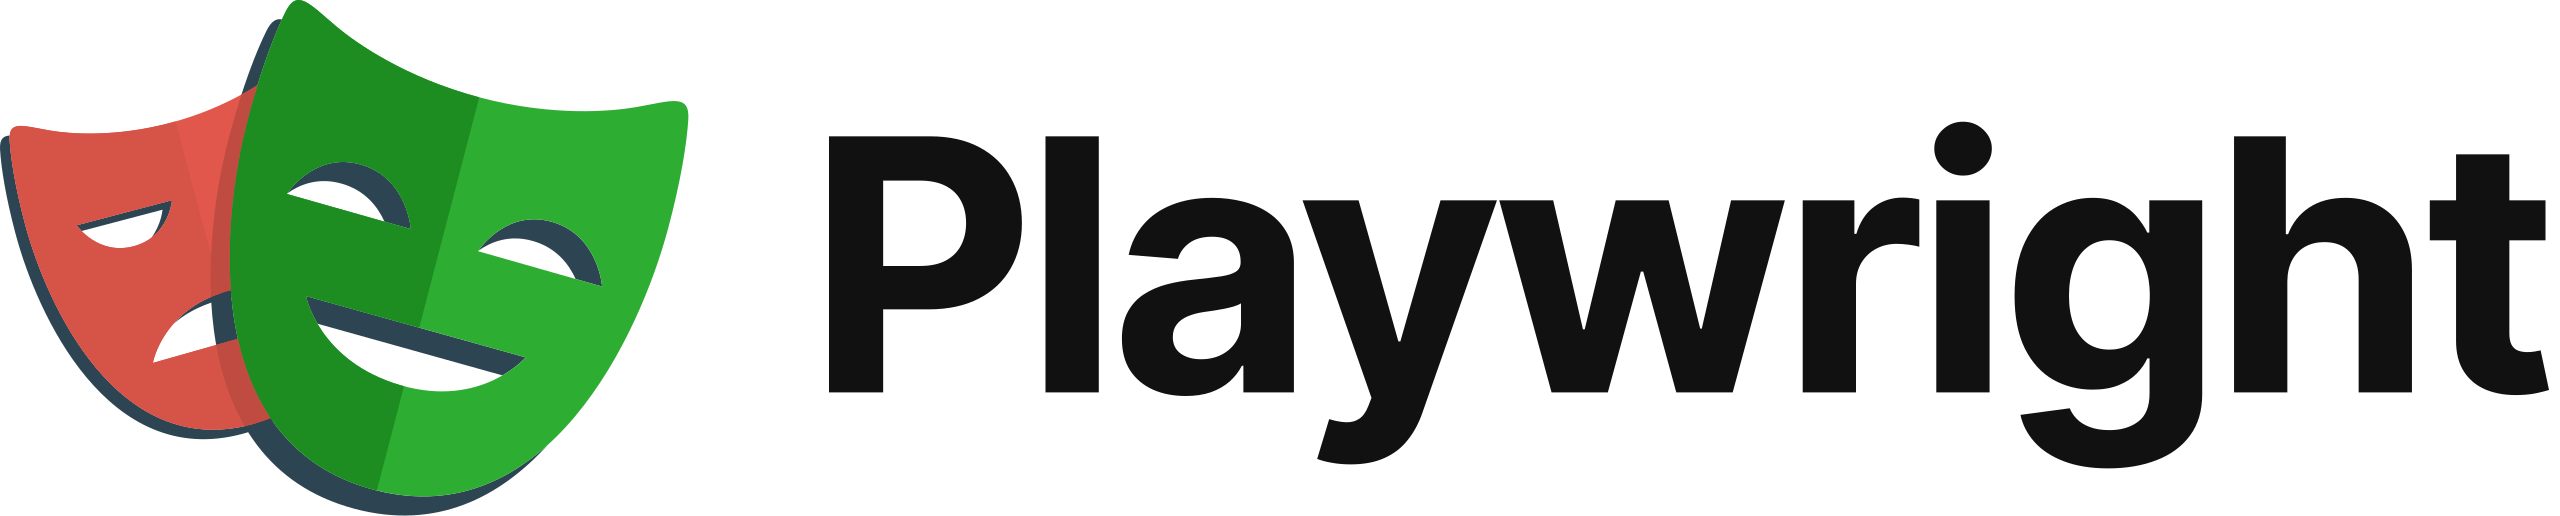 logo playwright